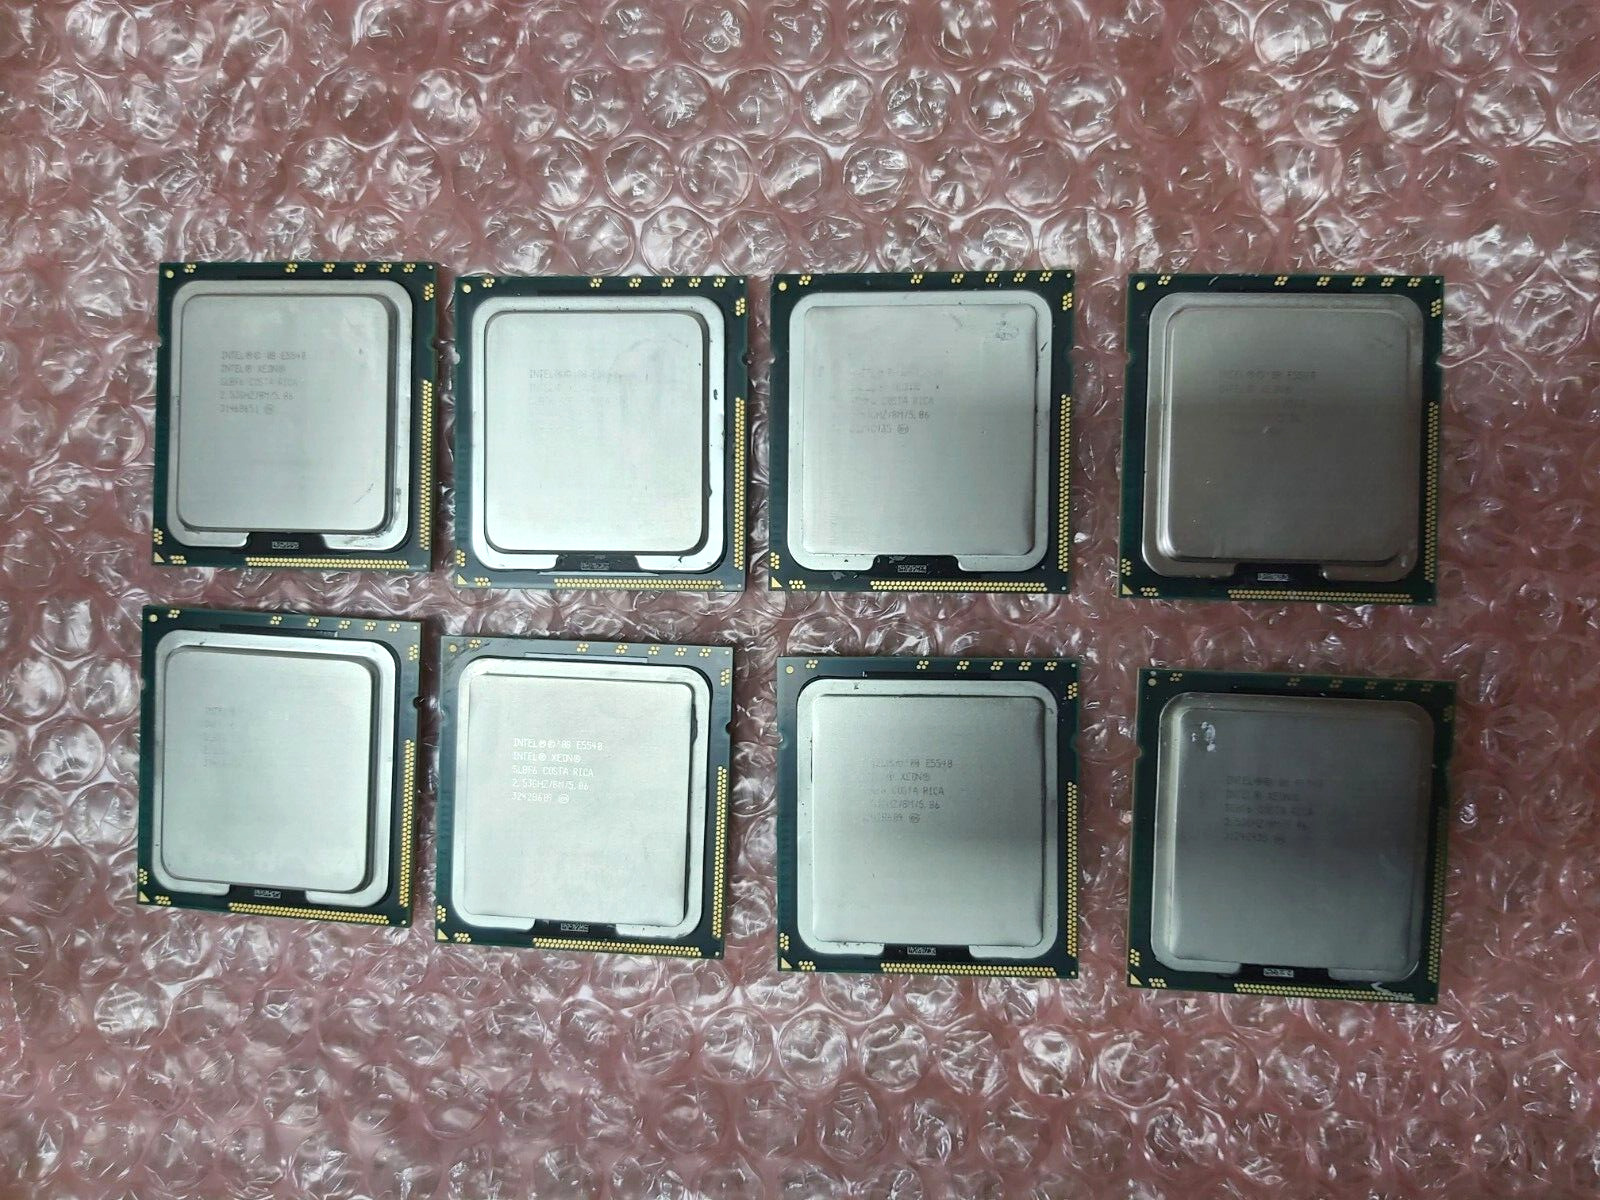 8 PCS Intel Xeon E5540 SLBF6 2.53GHz 8M Quad Core LGA 1366 Server CPU Processor